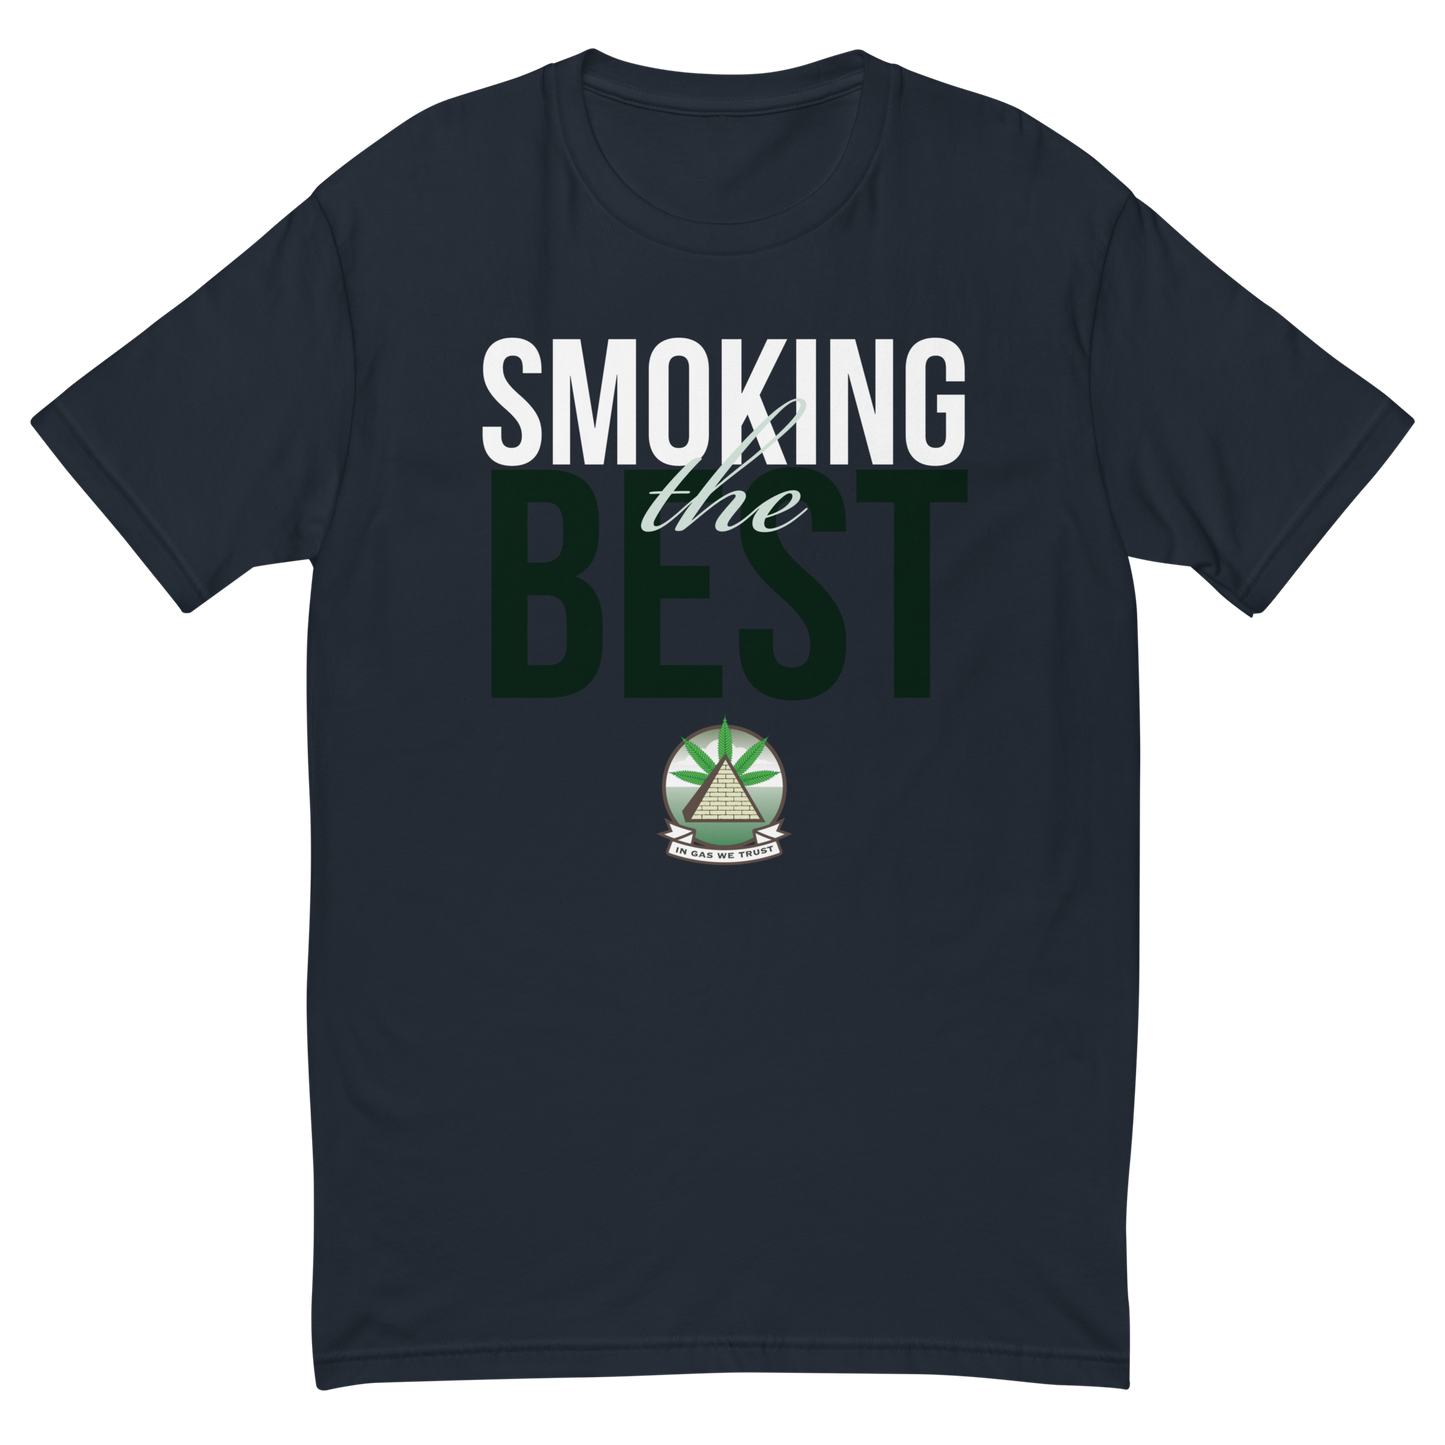 In Gas We Trust Unisex T-Shirt - Smoking The Best